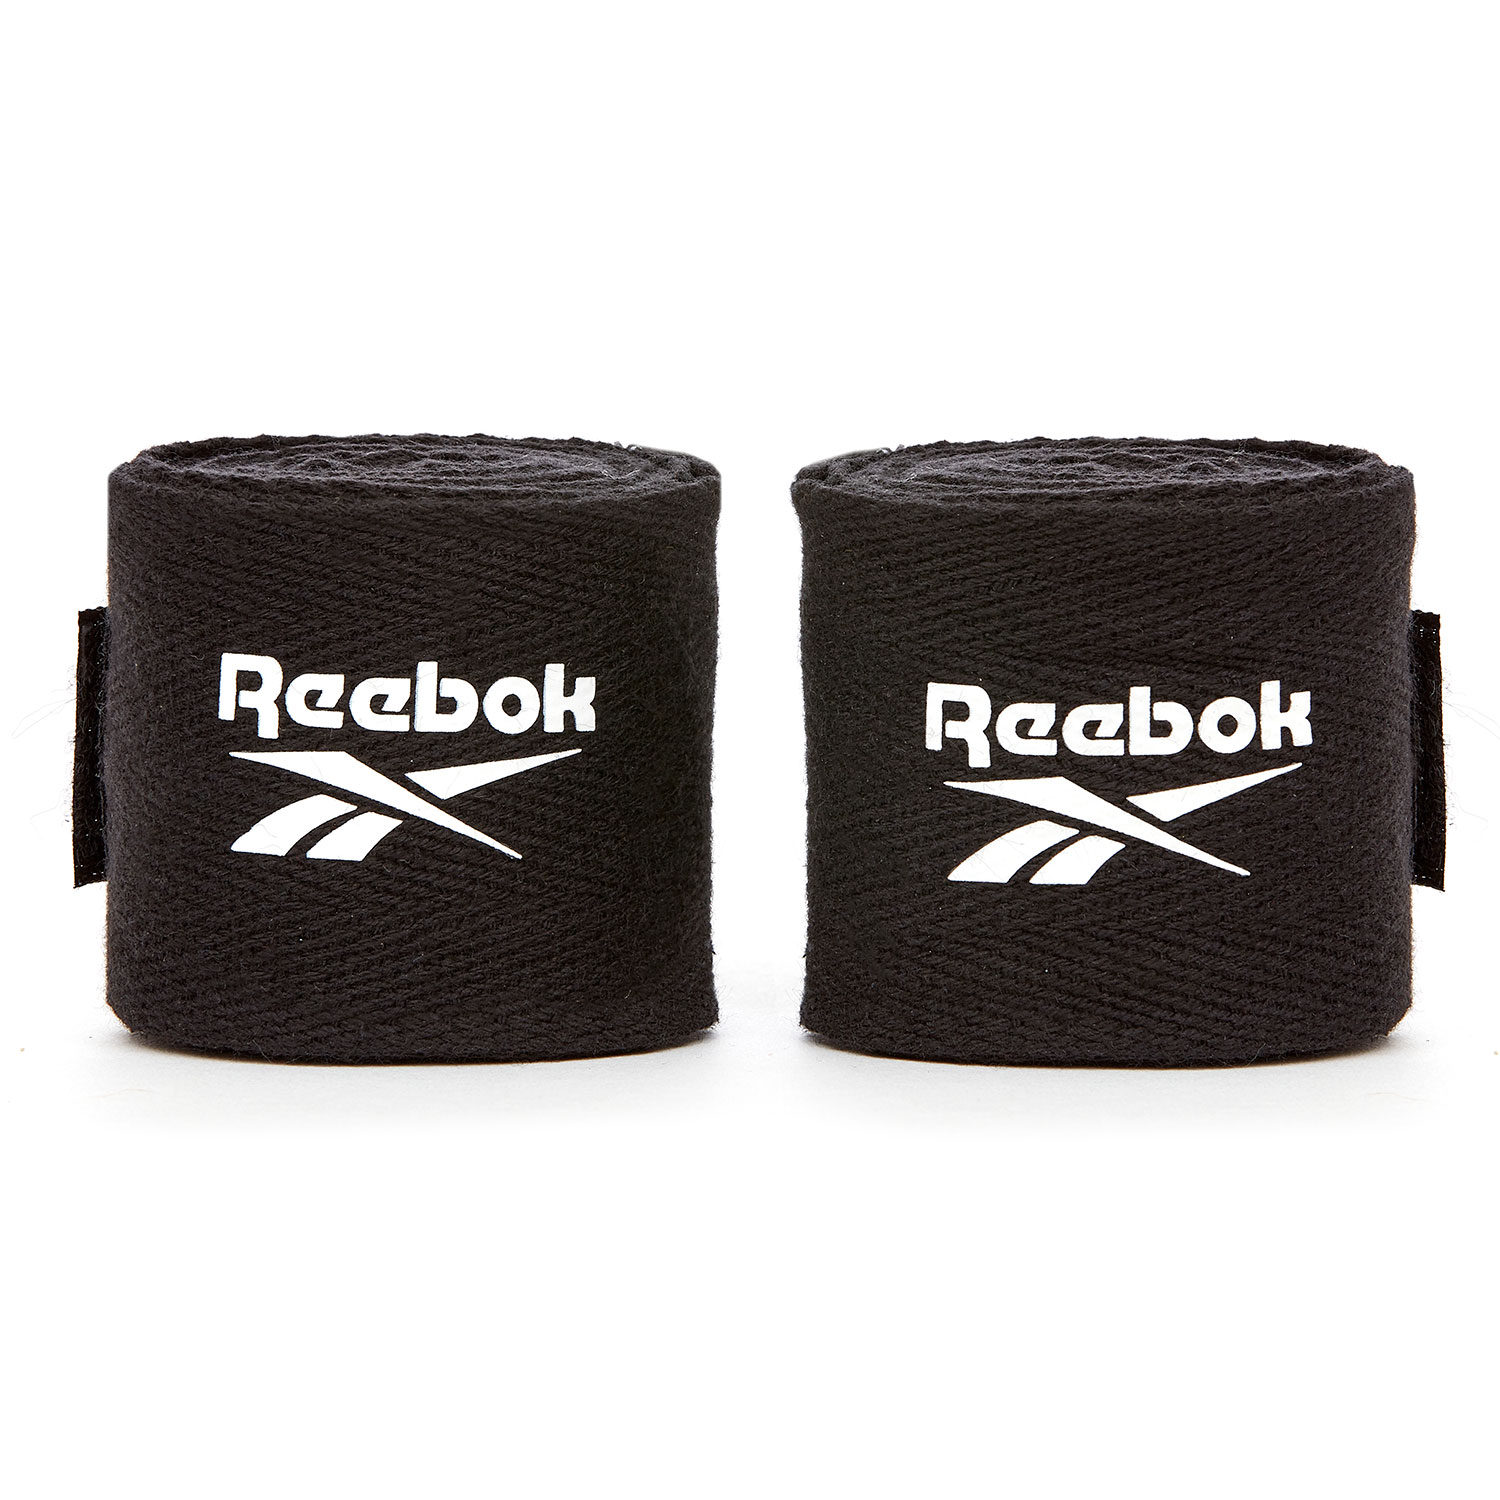 Reebok boxing gloves and wrap set 12oz